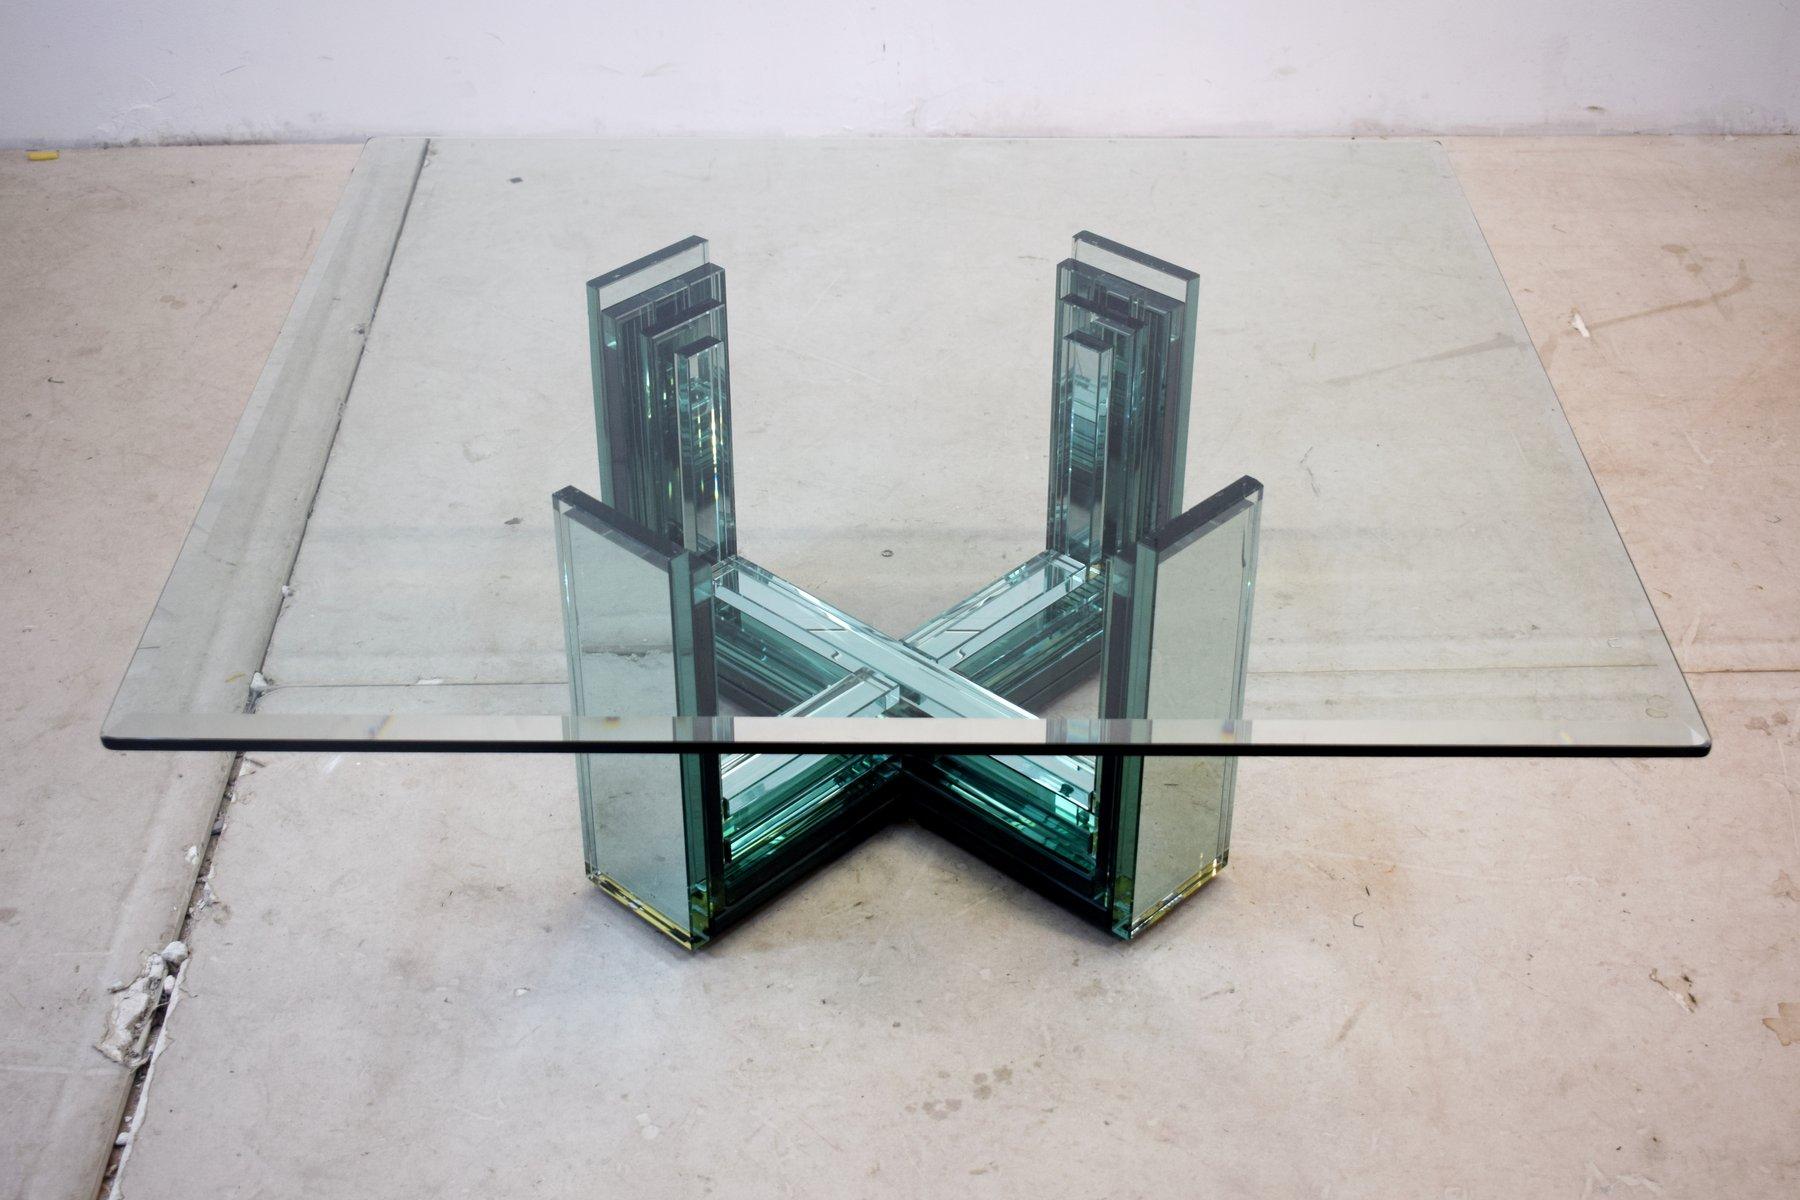 Italian glass coffee table, 1970s.
Dimensions: H= 37 cm; W= 100 cm; D= 93 cm.